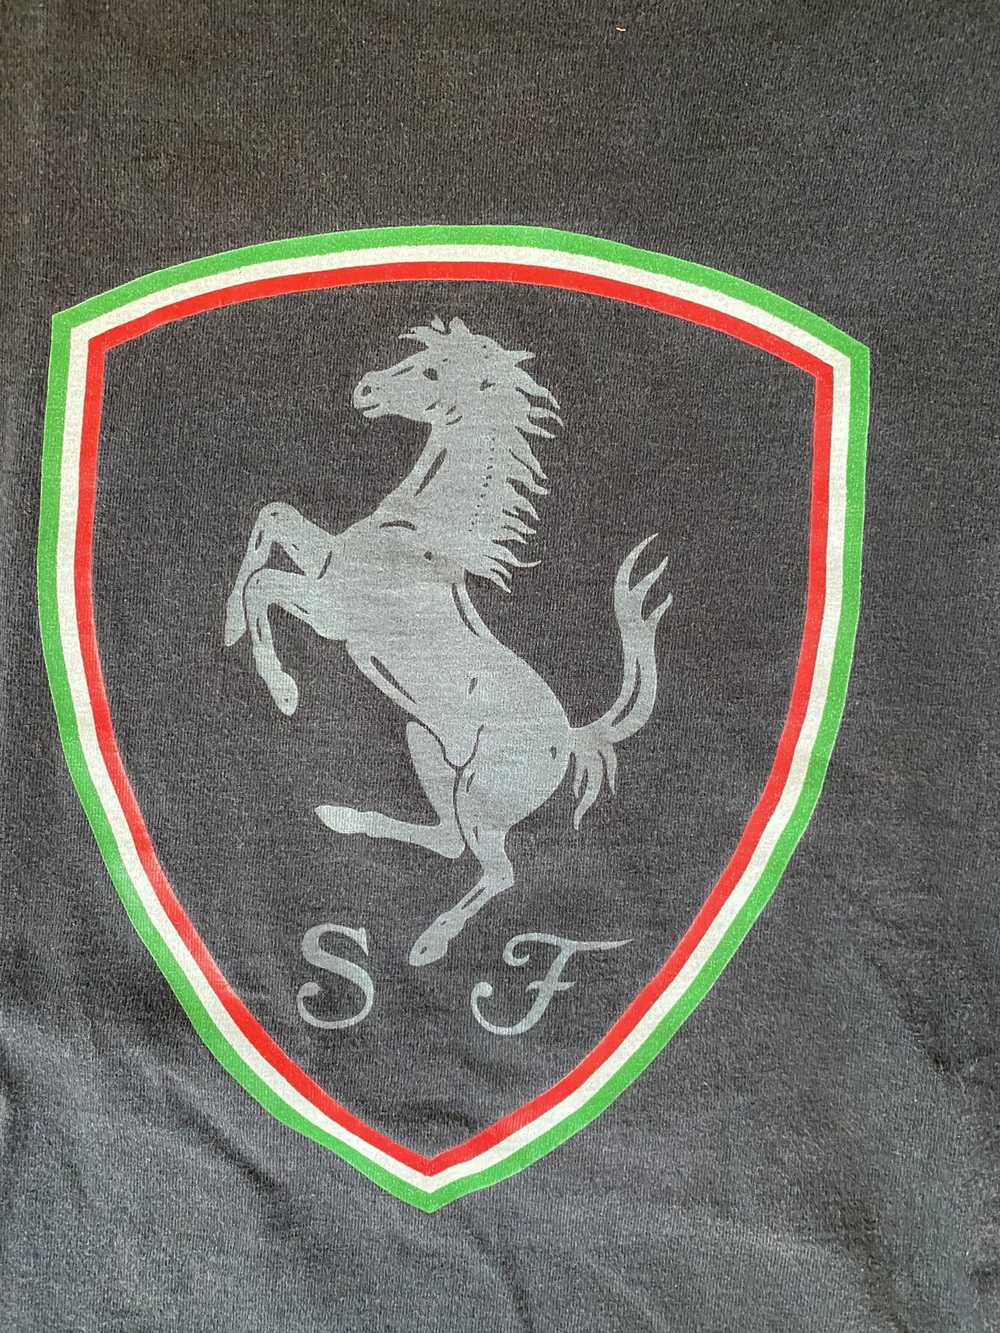 Ferrari Ferrari horse emblem t shirt - image 4